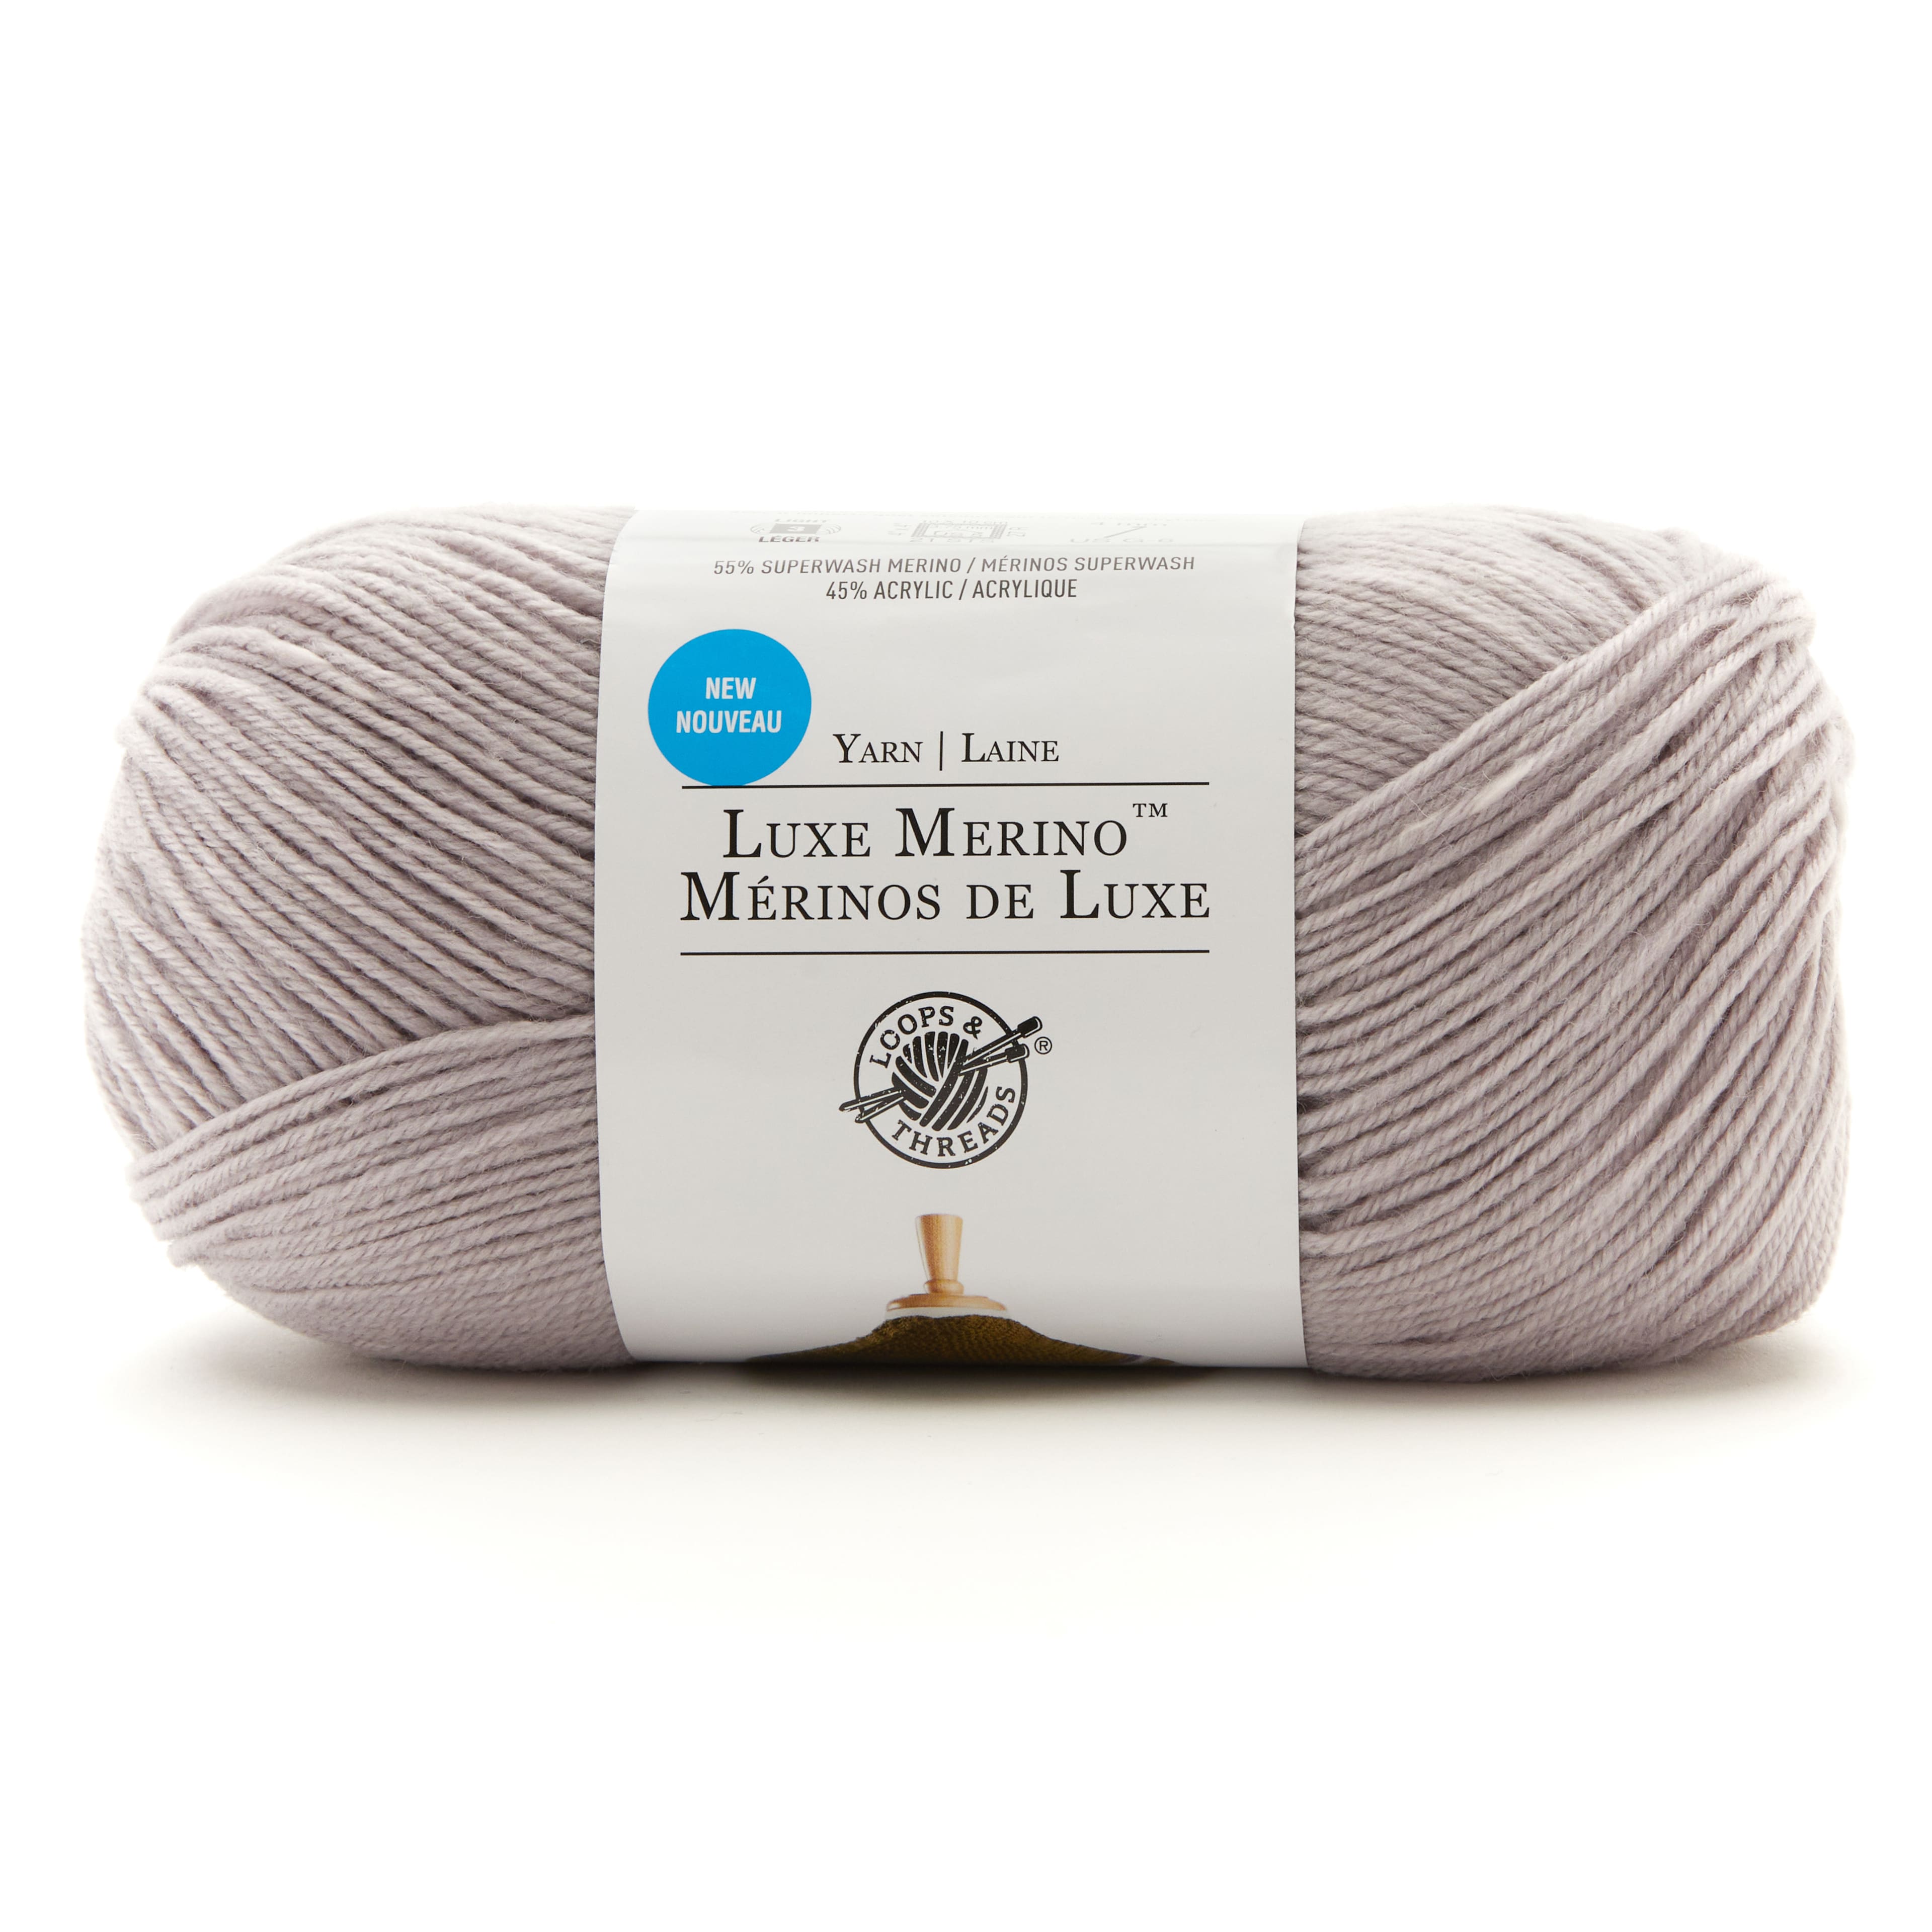 Loops & Threads Chunky Grande Yarn “Dark Grey”